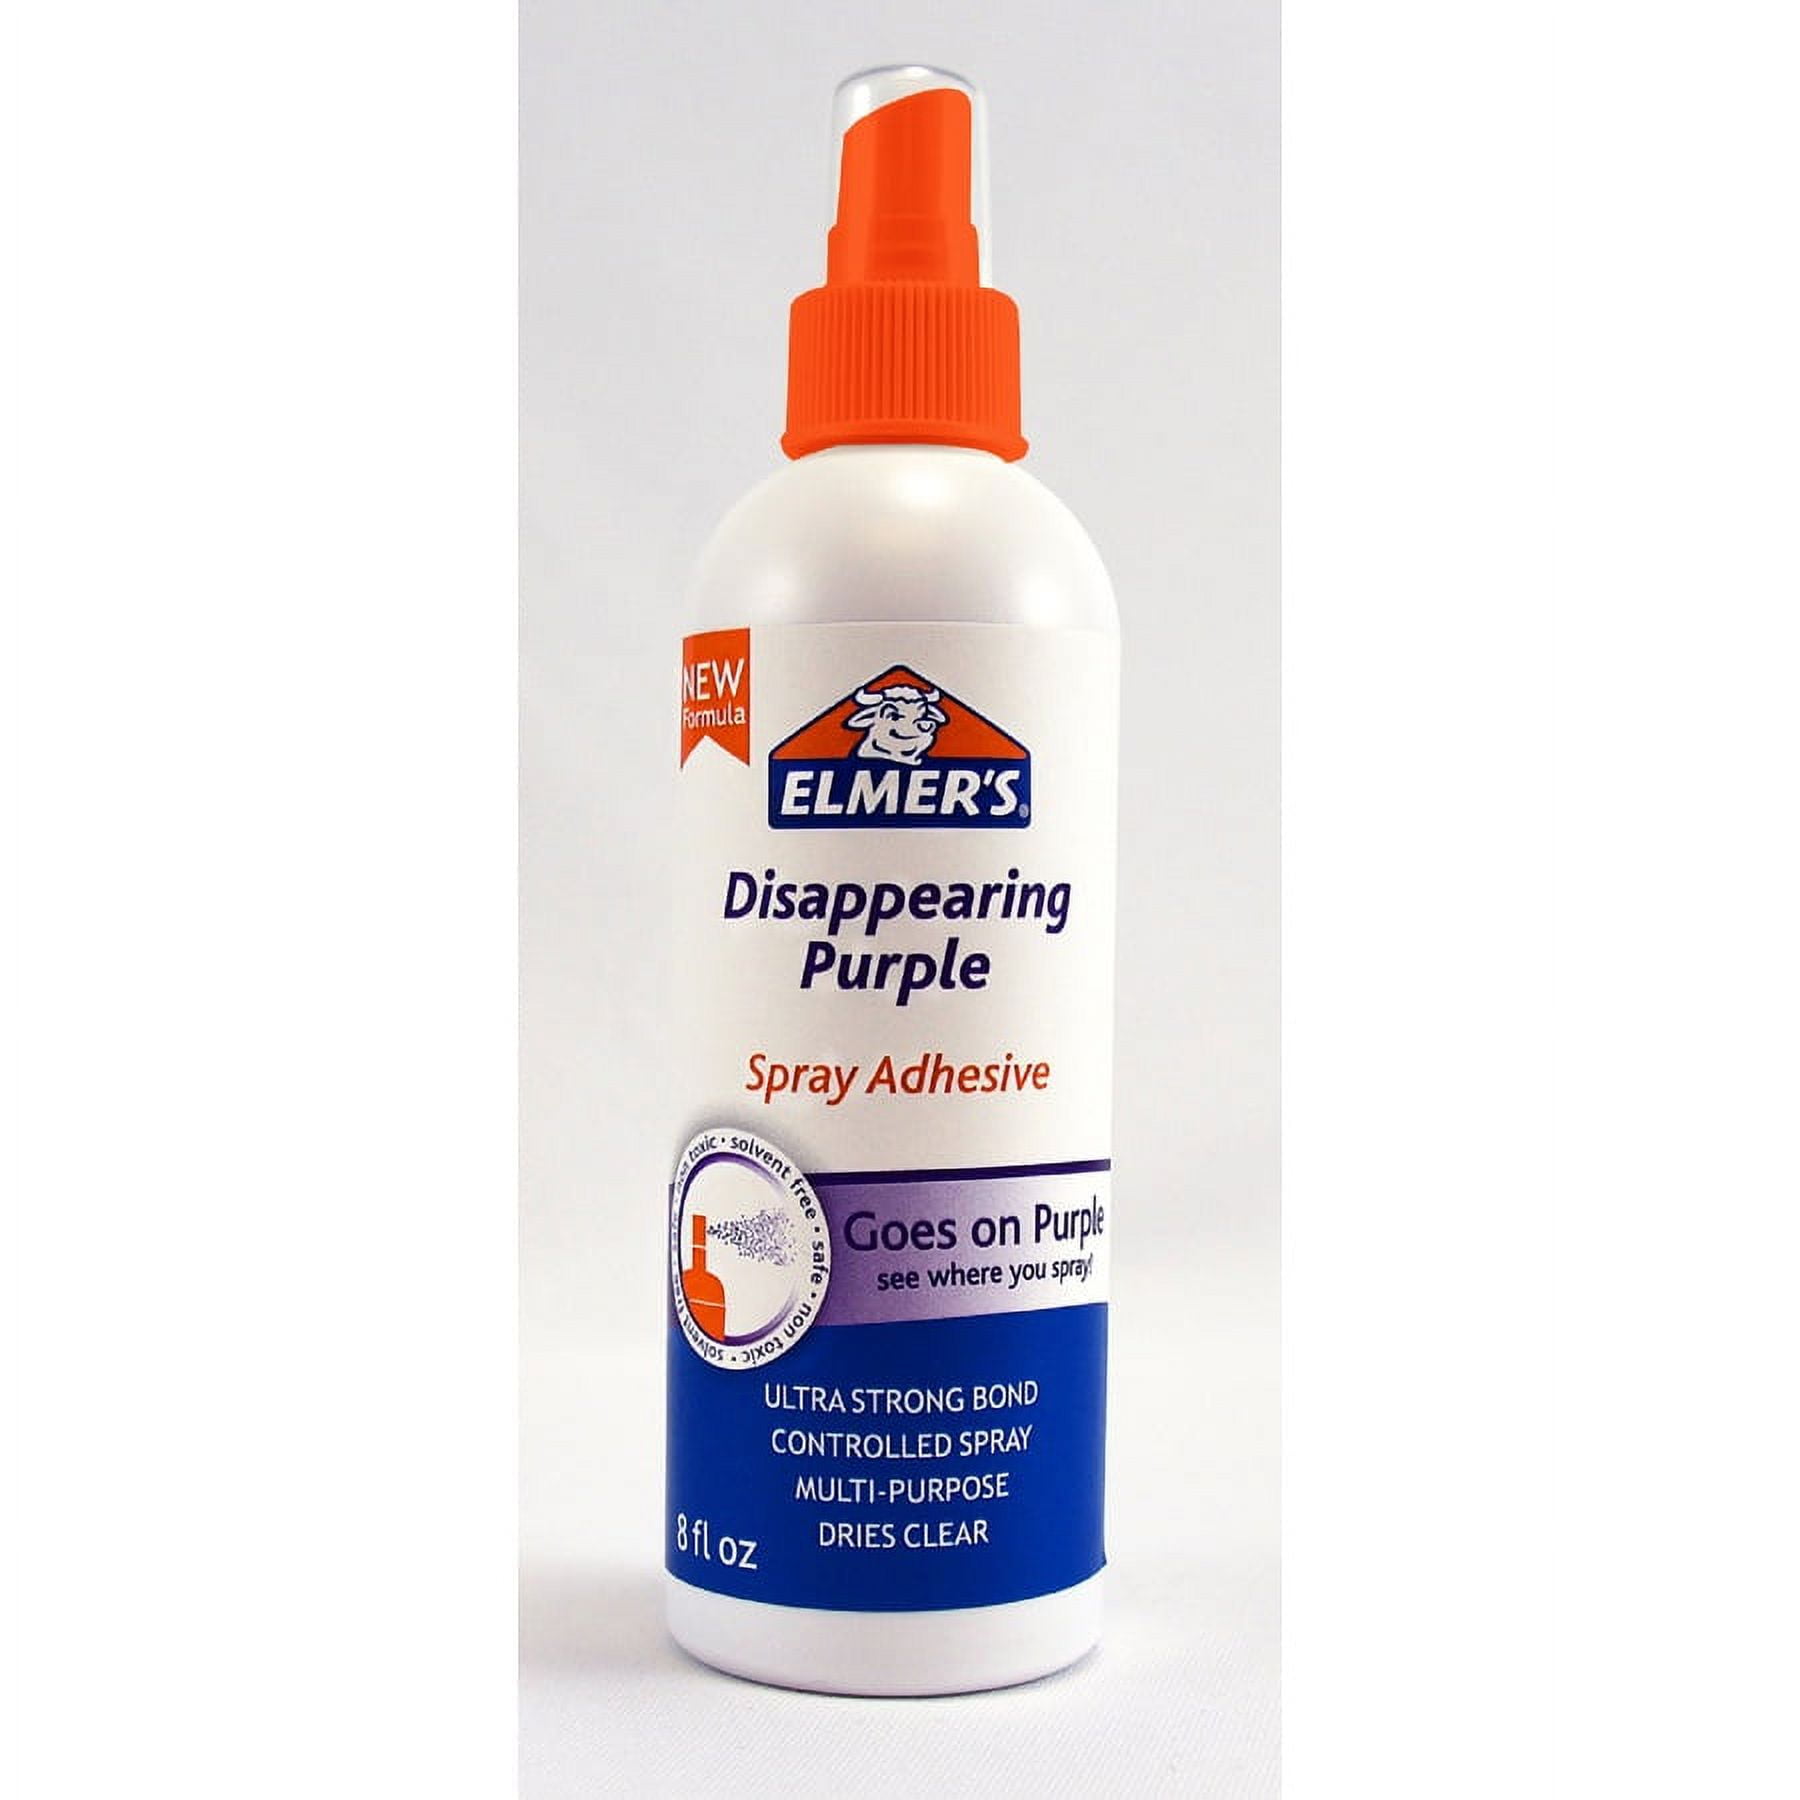 OASIS® Glue Spray 400 ml, lepidlo ve spreji